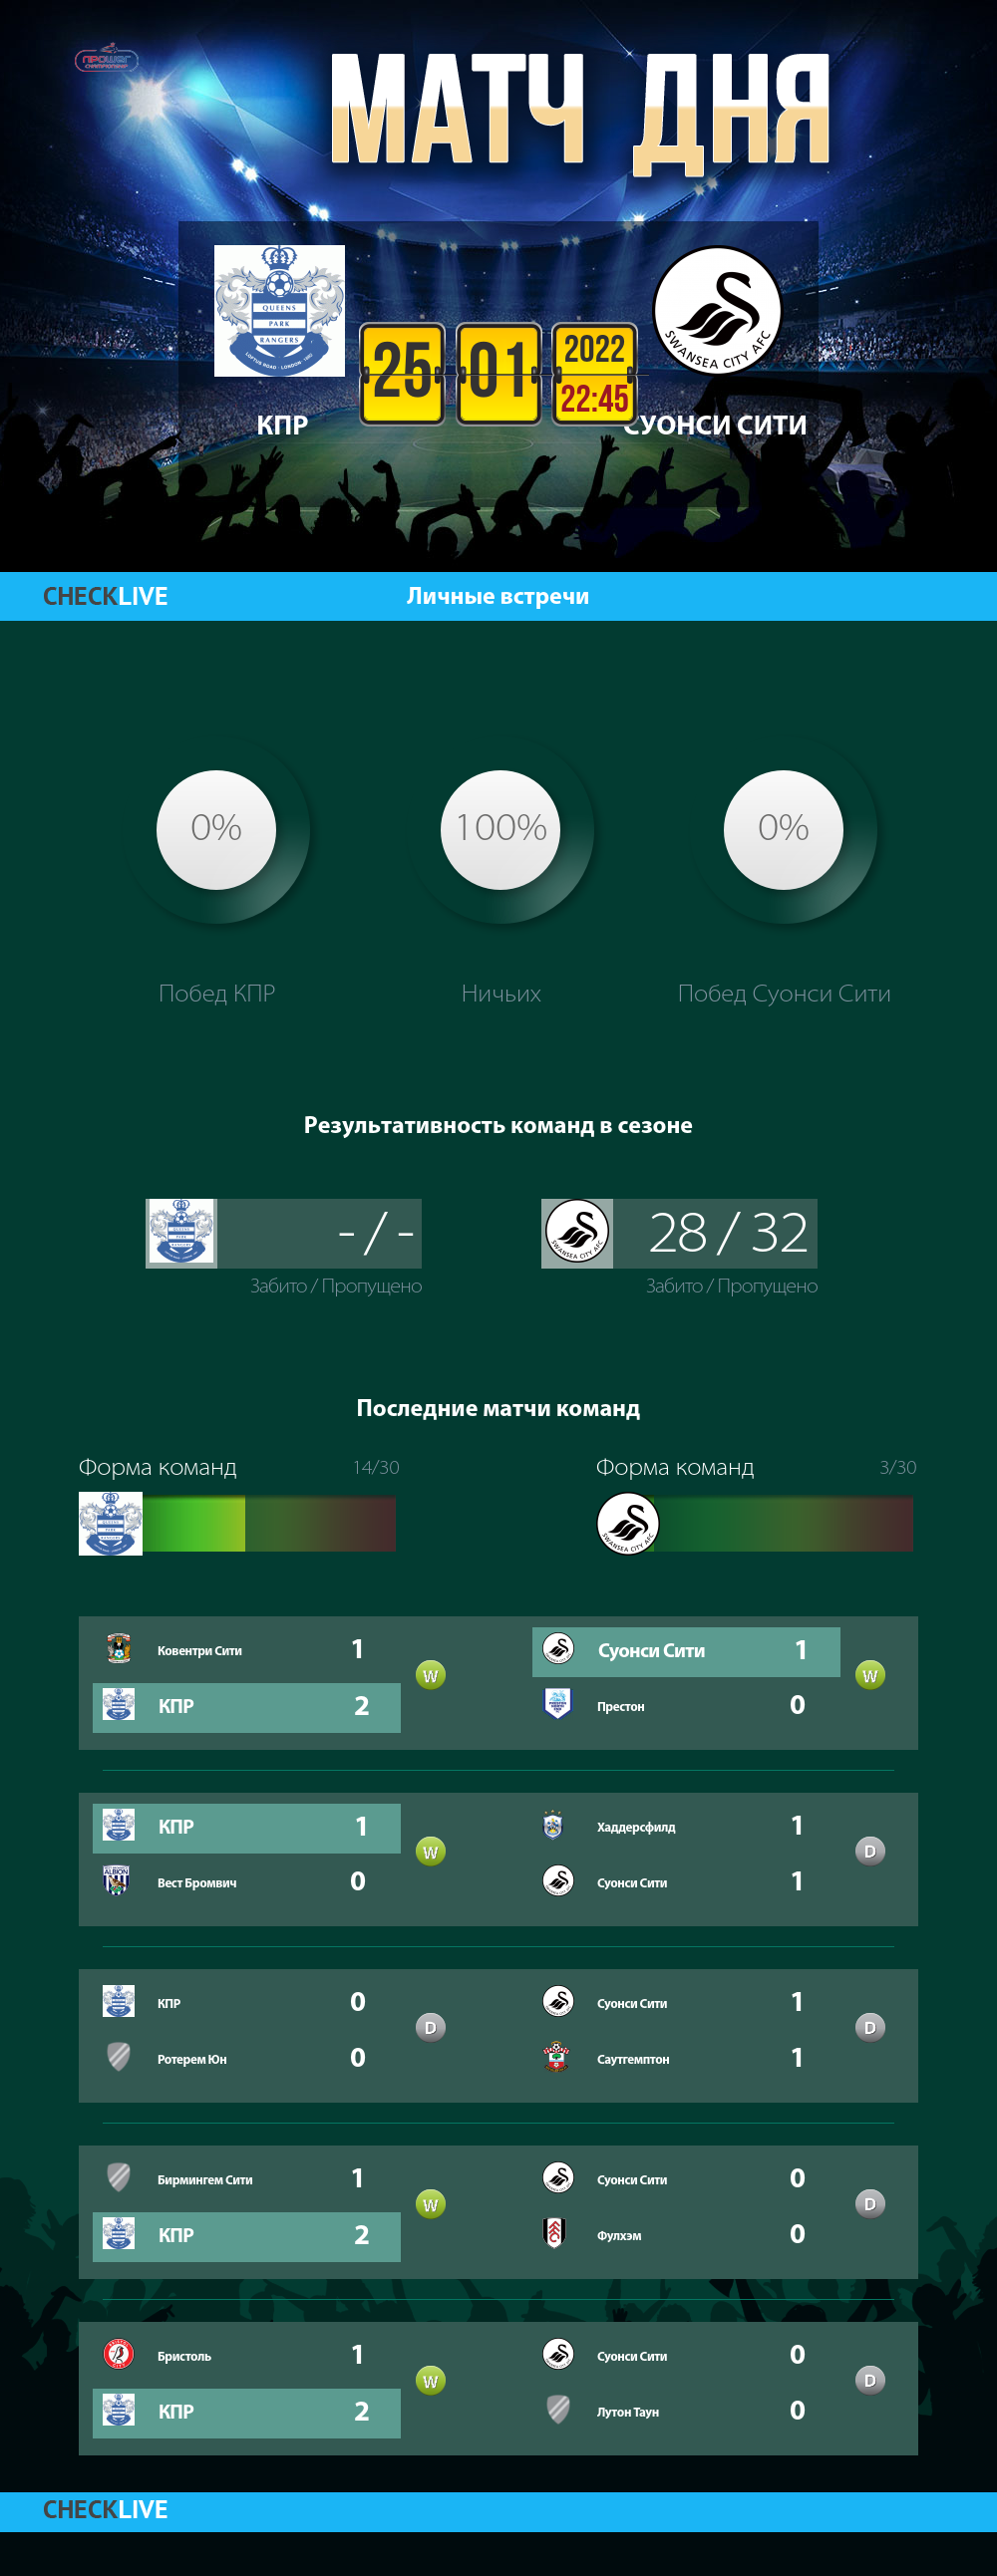 Инфографика КПР и Суонси Сити матч дня 25.01.2022